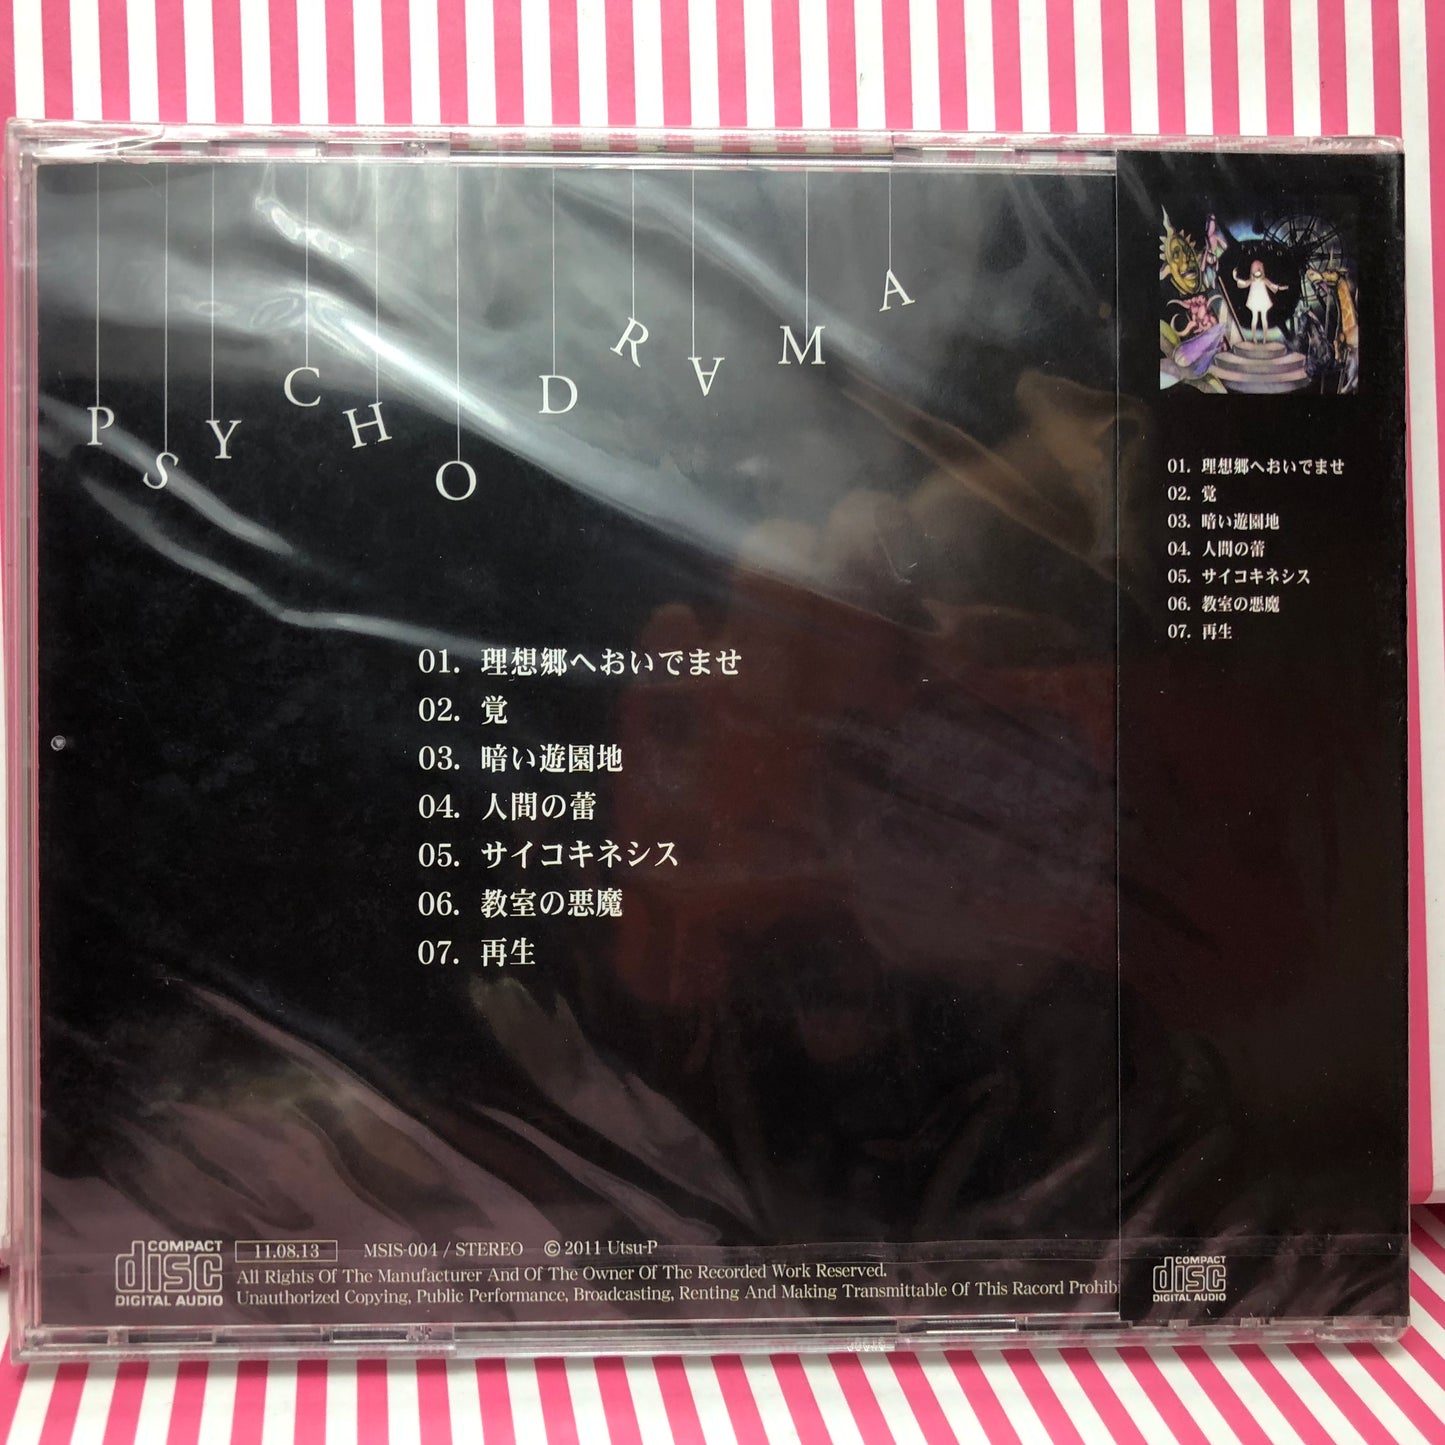 Utsu-P - Psychodrama CD